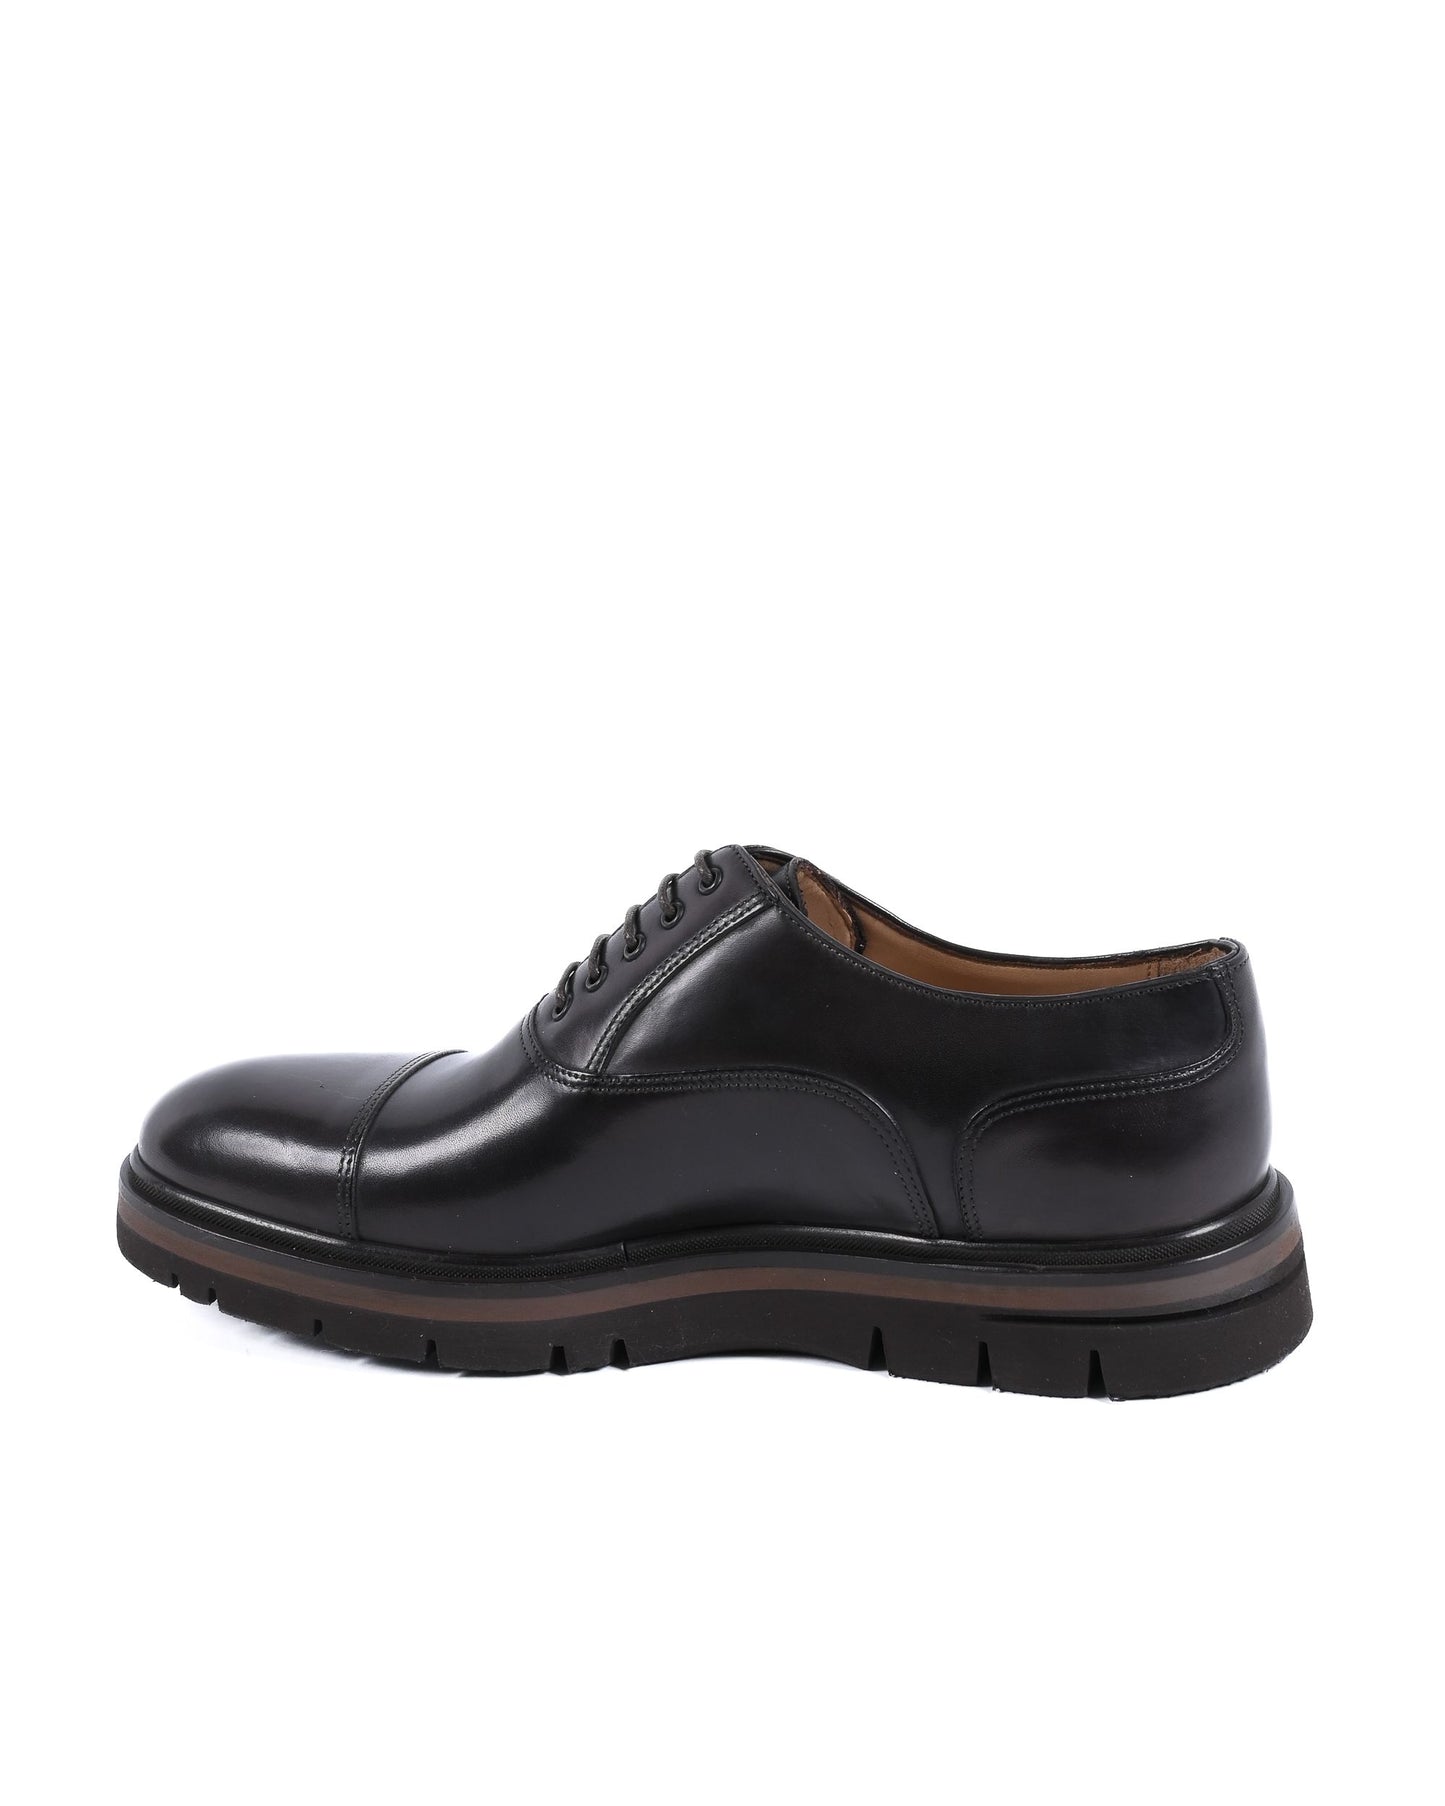 Dee Ocleppo Mens Brogue Shoes  EB127 VITELLO T MORO